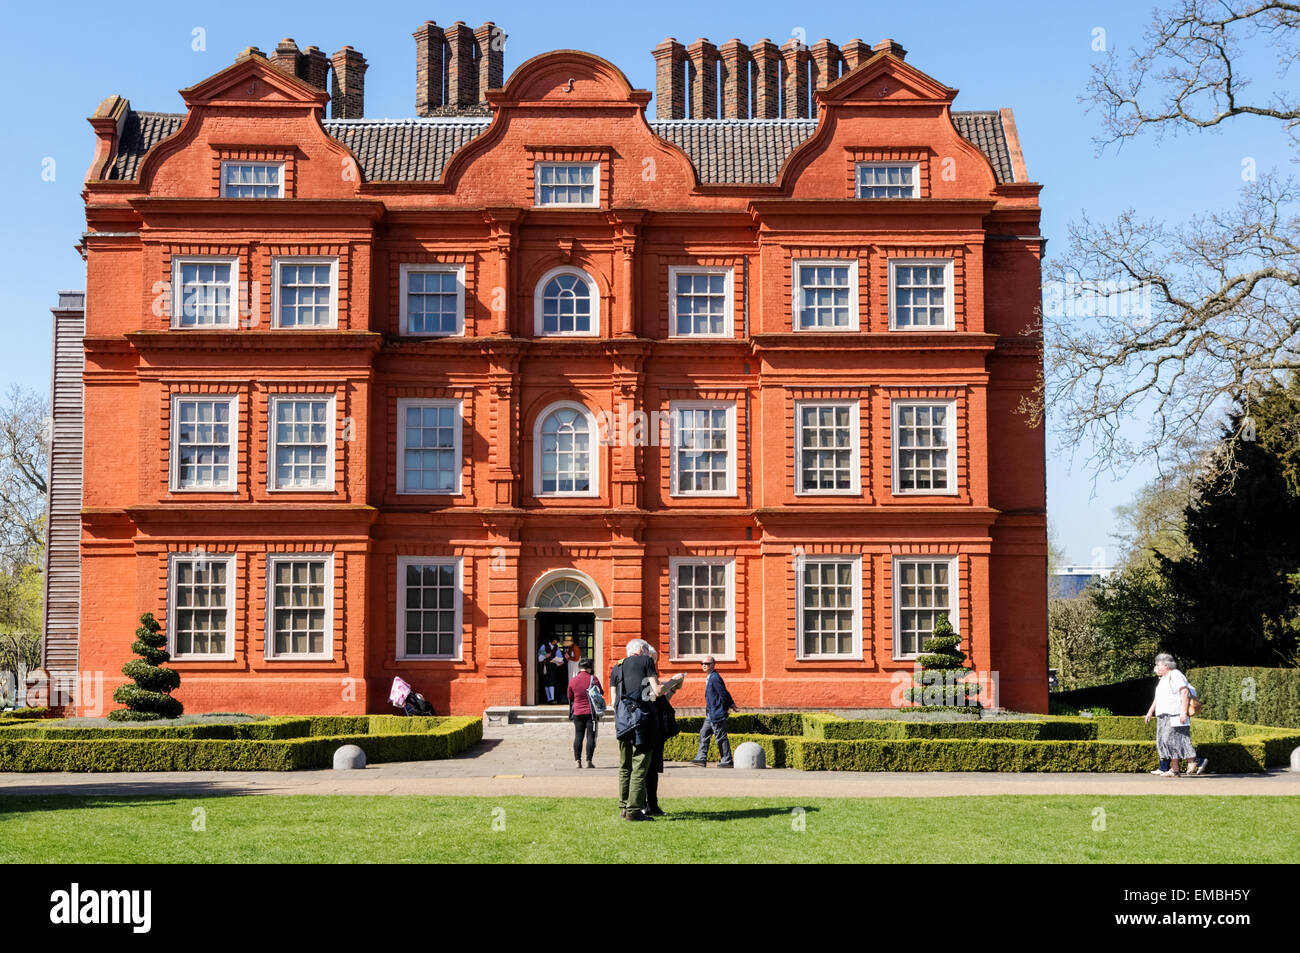 The 17th century Kew Palace in the Kew Gardens, London England United Kingdom UK Stock Photo